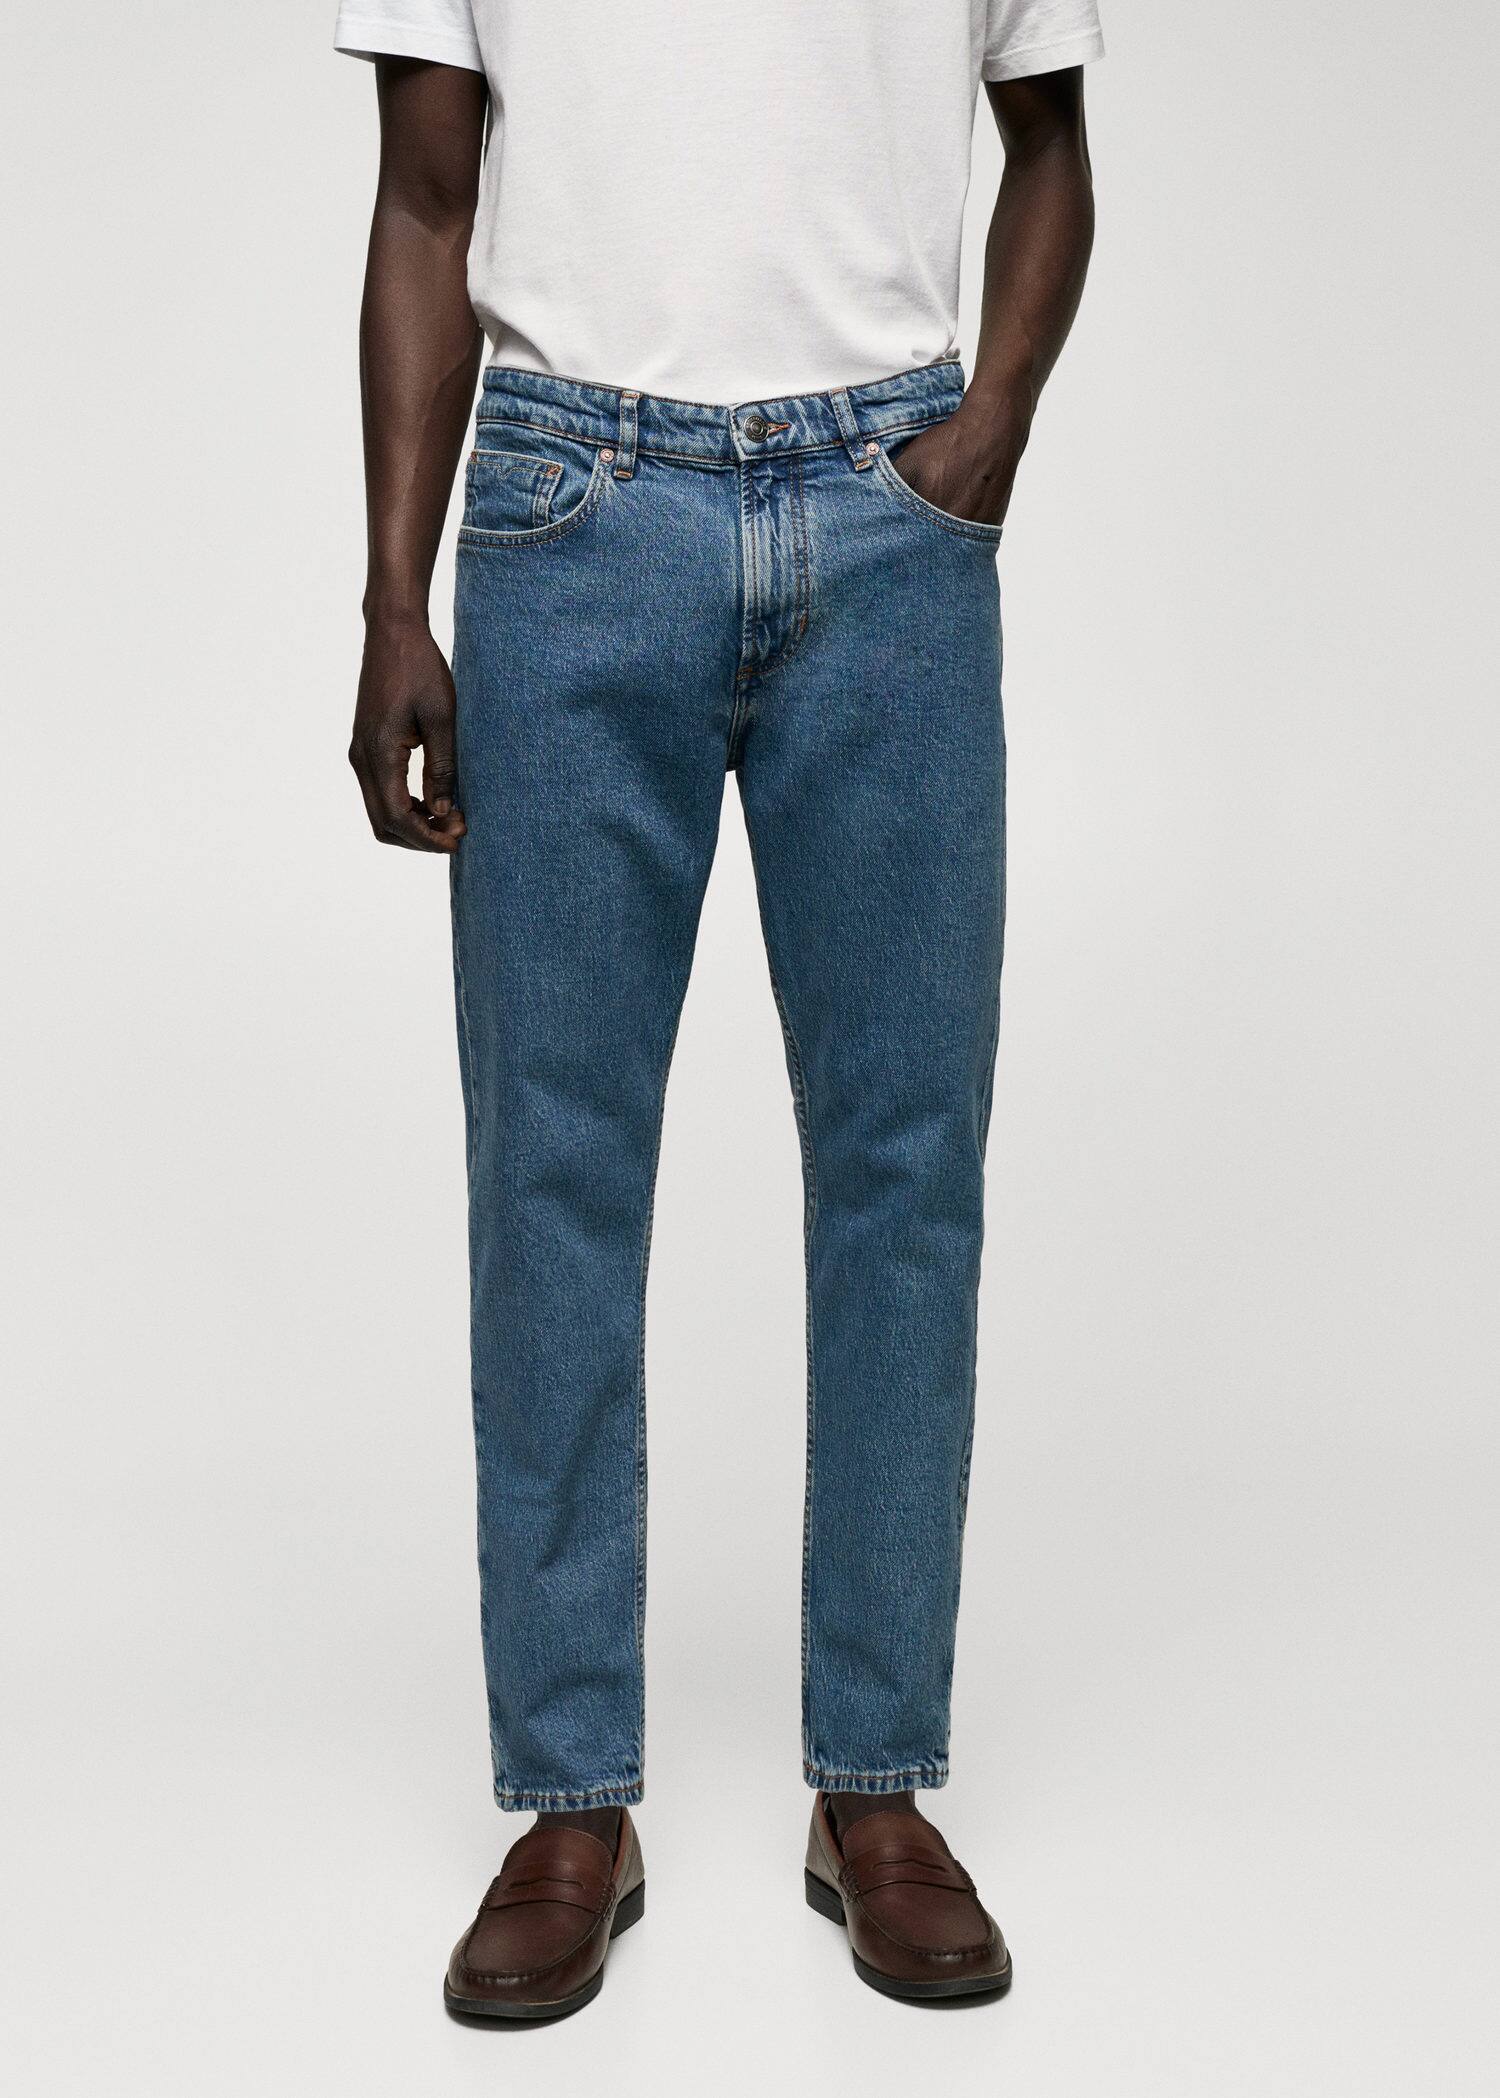 Ben tapered cropped jeans - Middenvlak